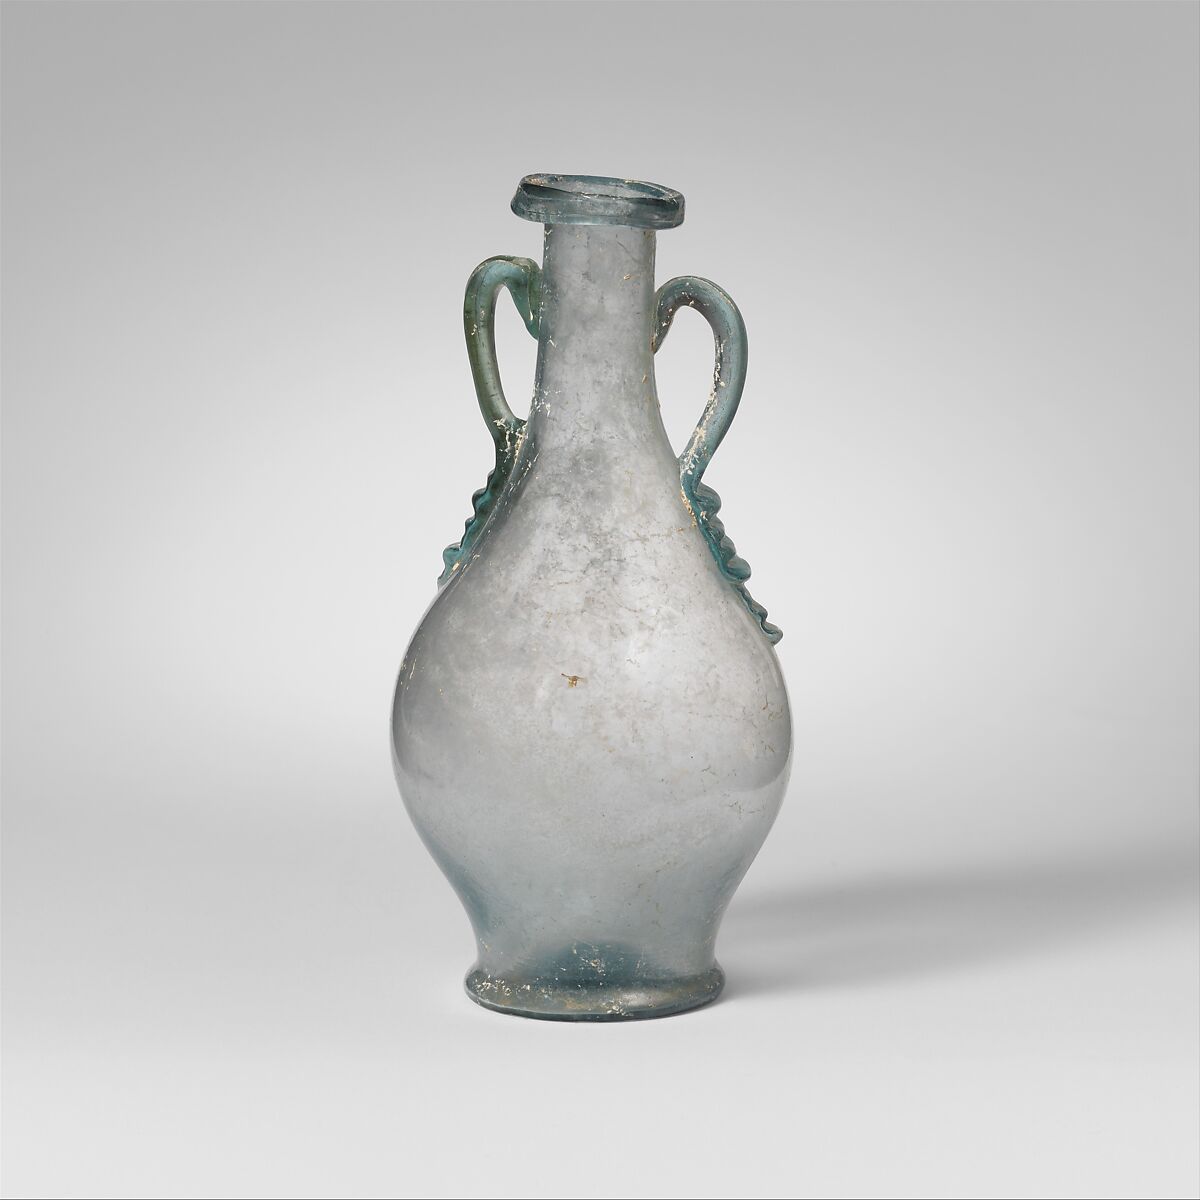 Glass two-handled bottle (amphora), Glass, Roman 